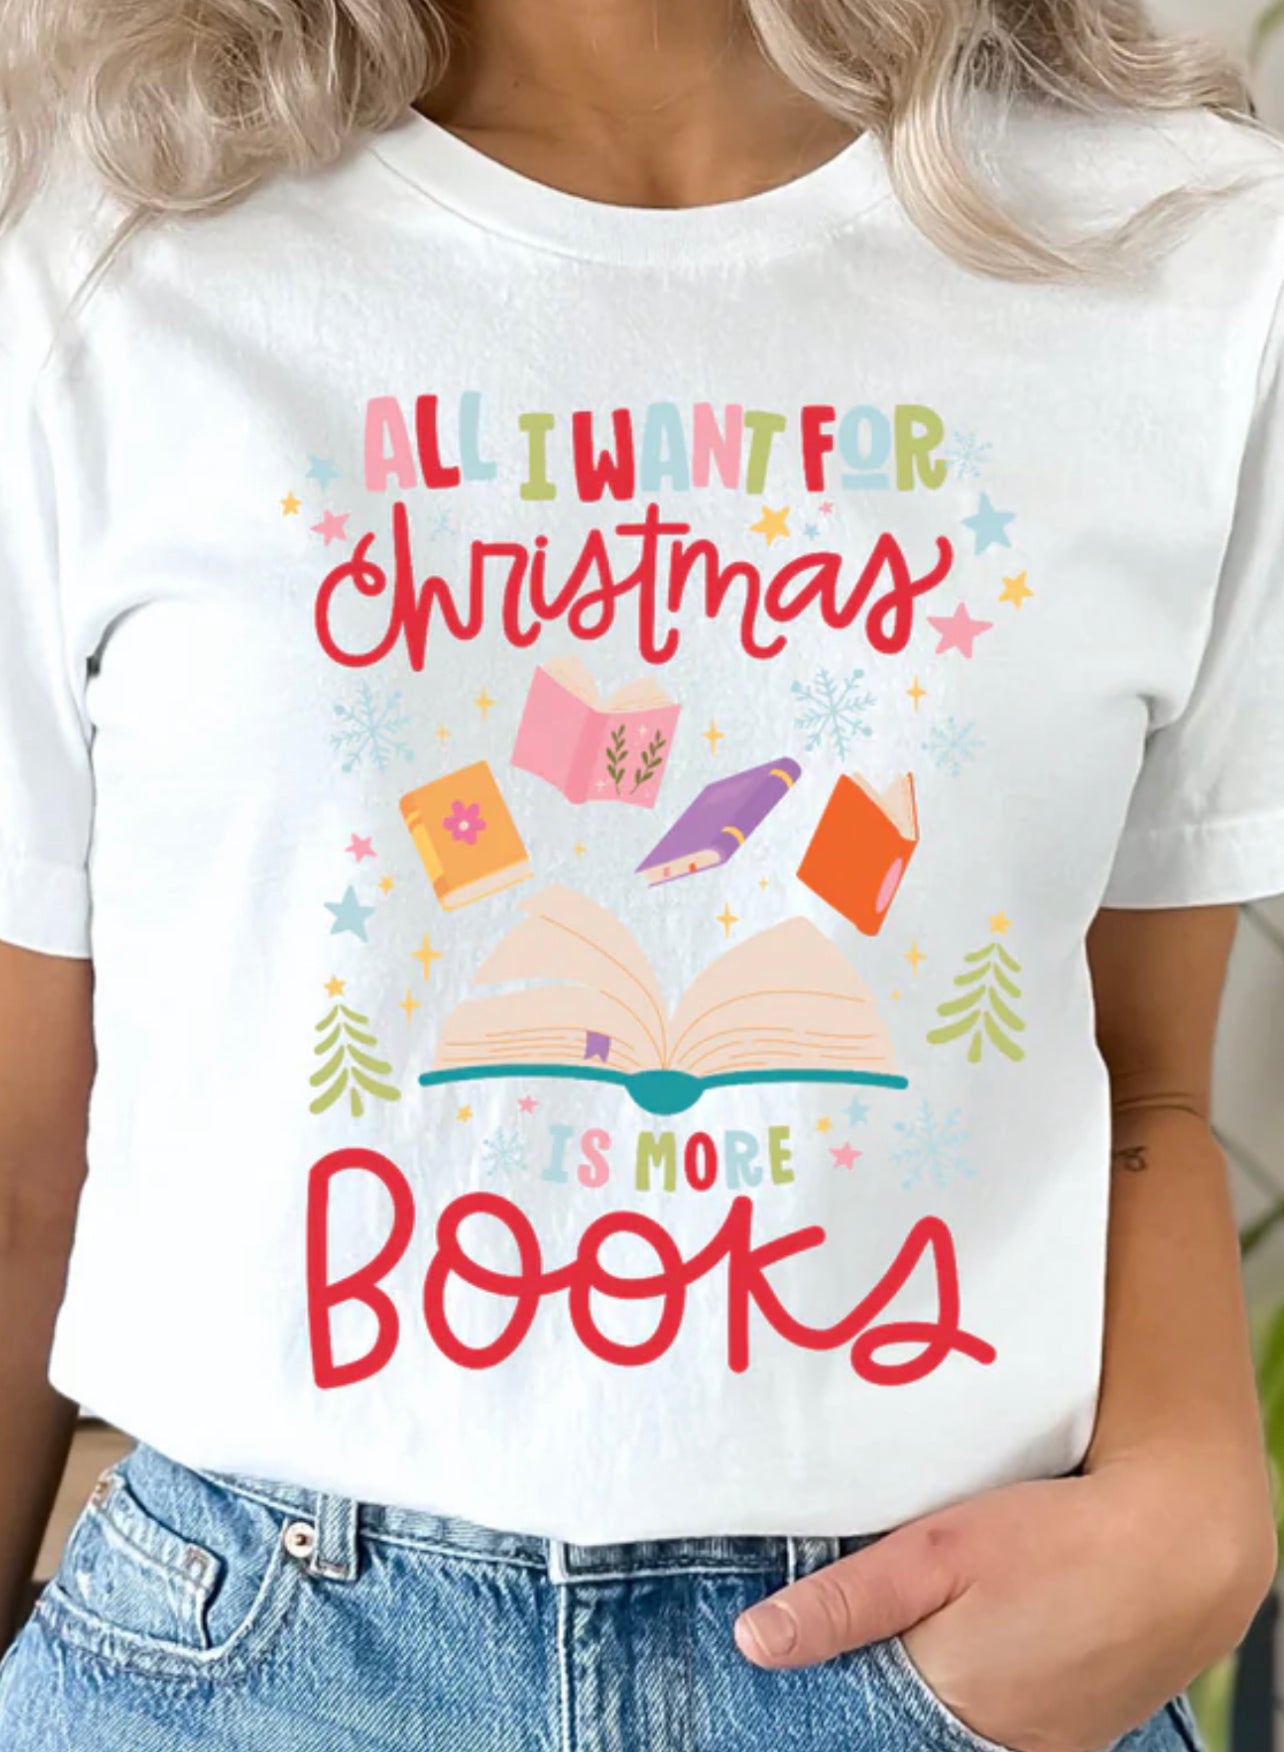 More Books-Tee or Crewneck Sweatshirt